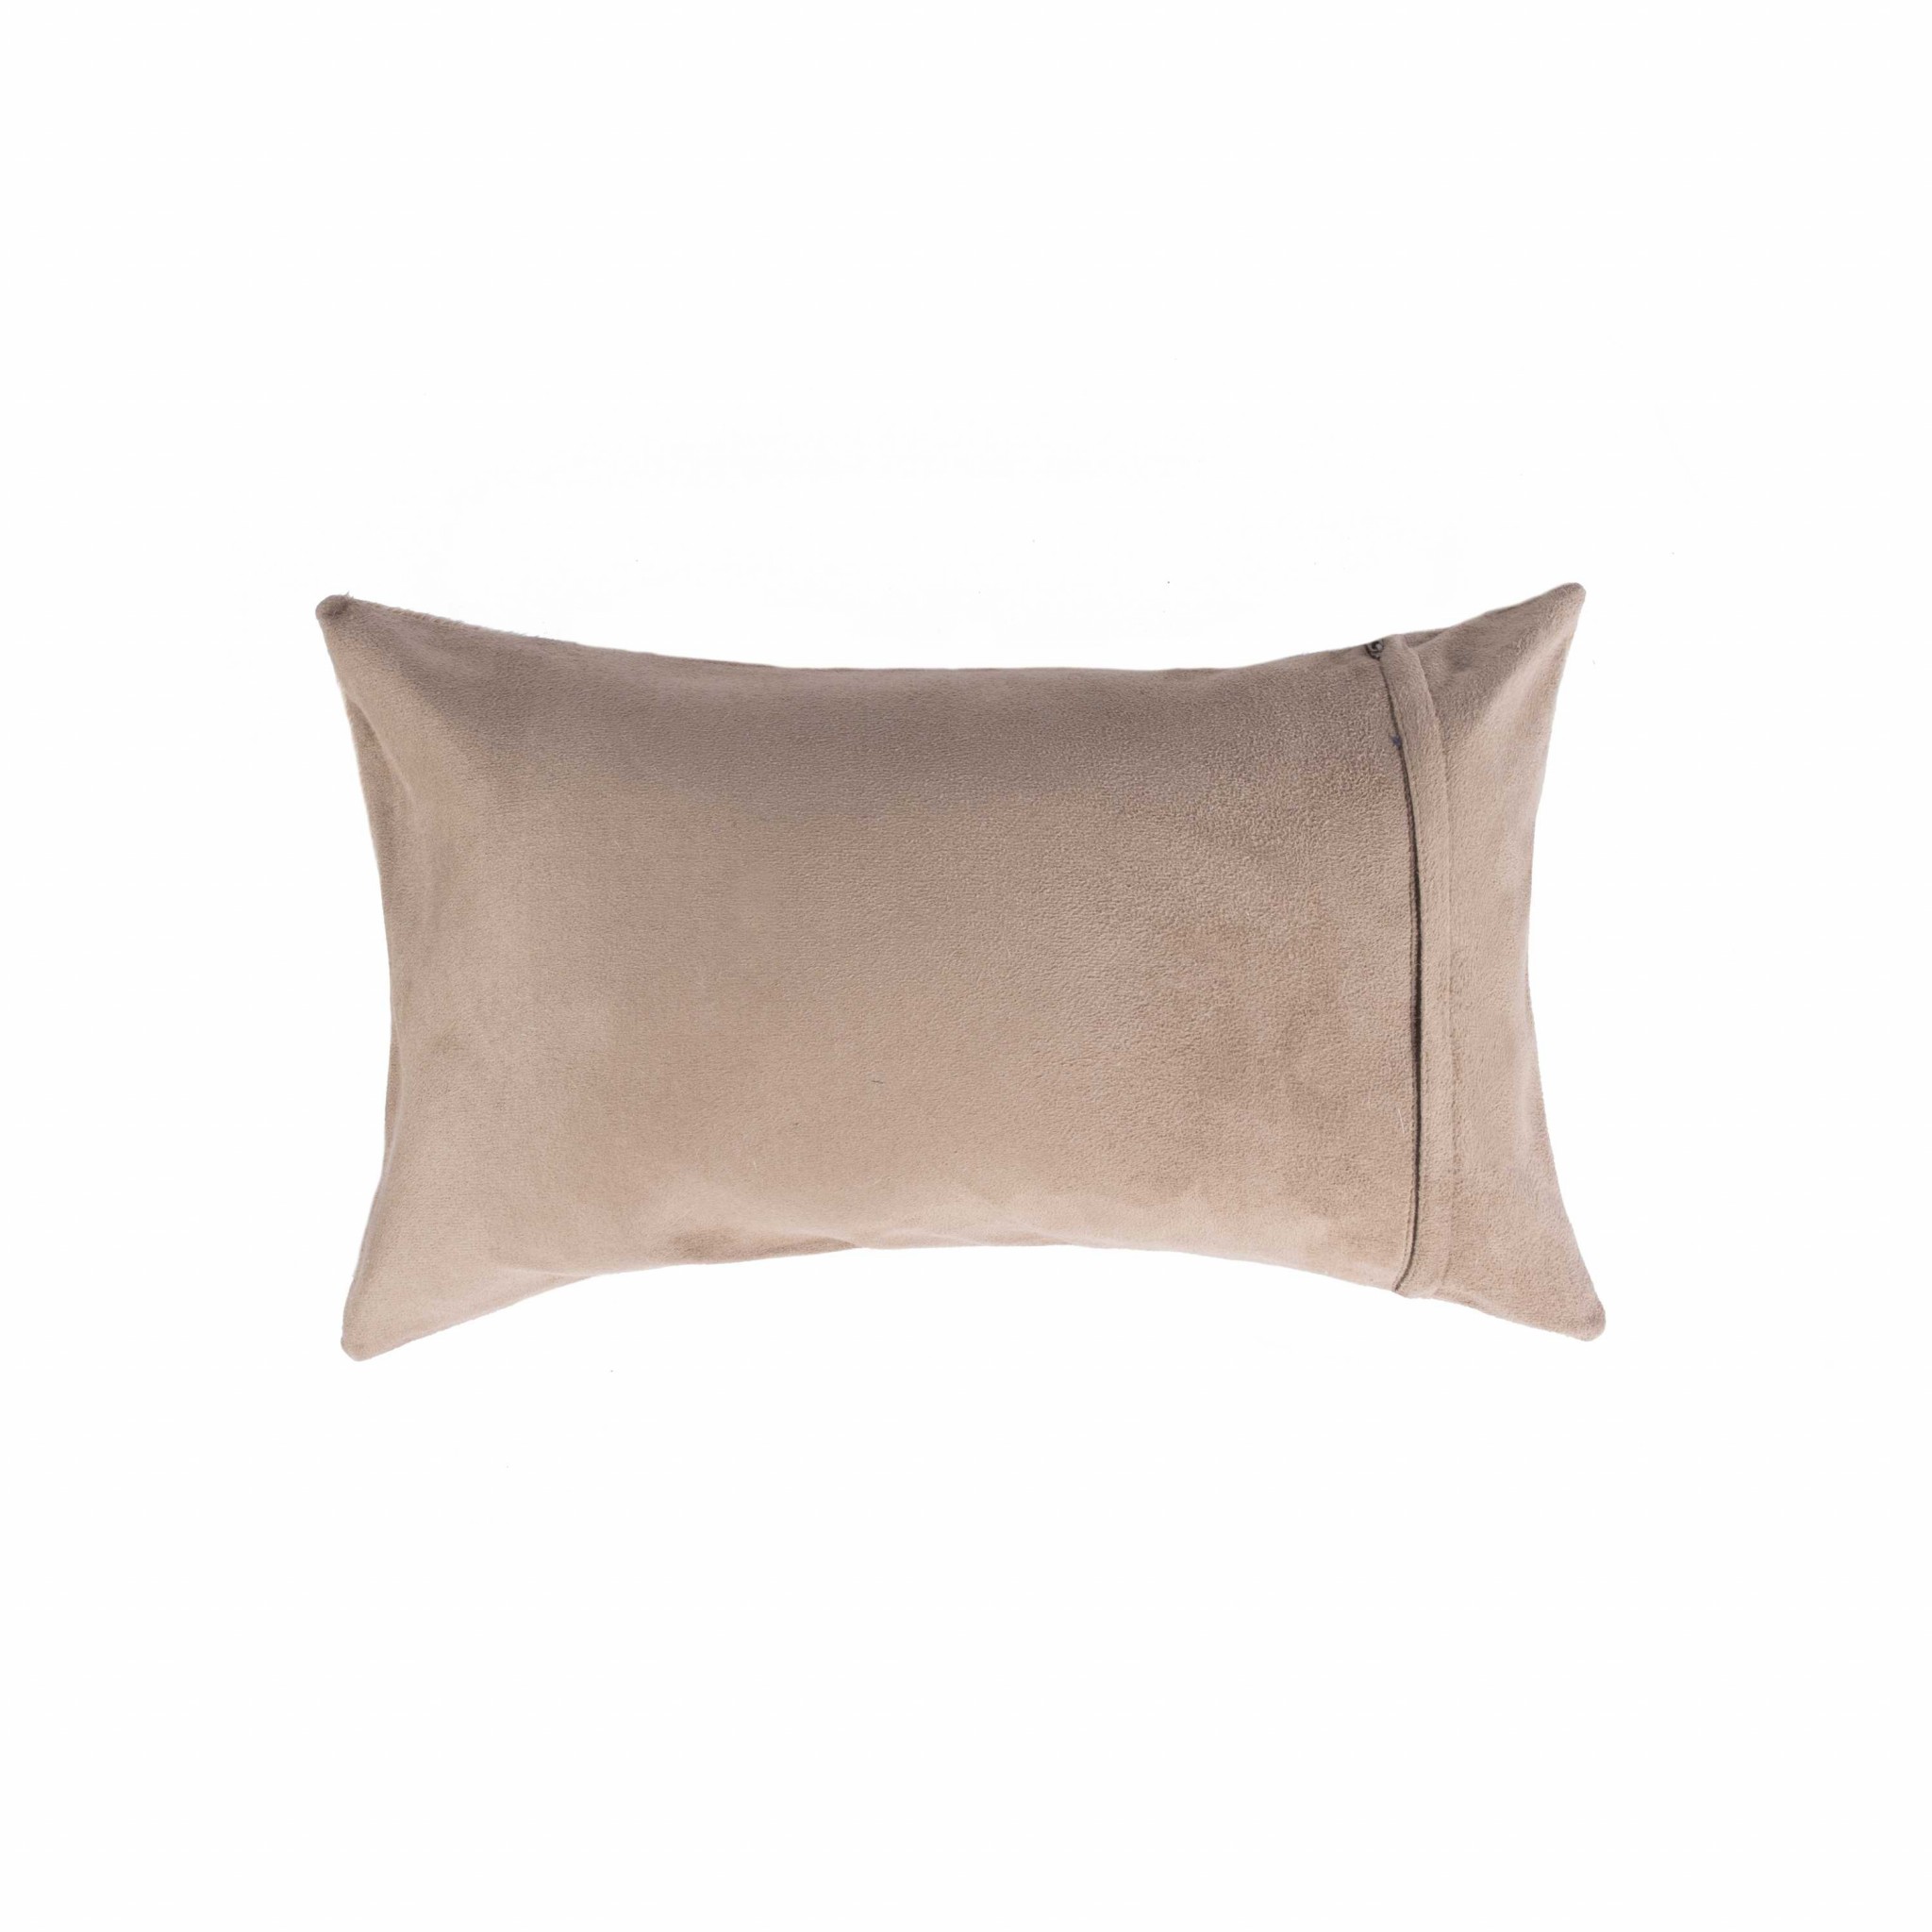 20" x 12" x 5" Brown Cowhide - Pillow